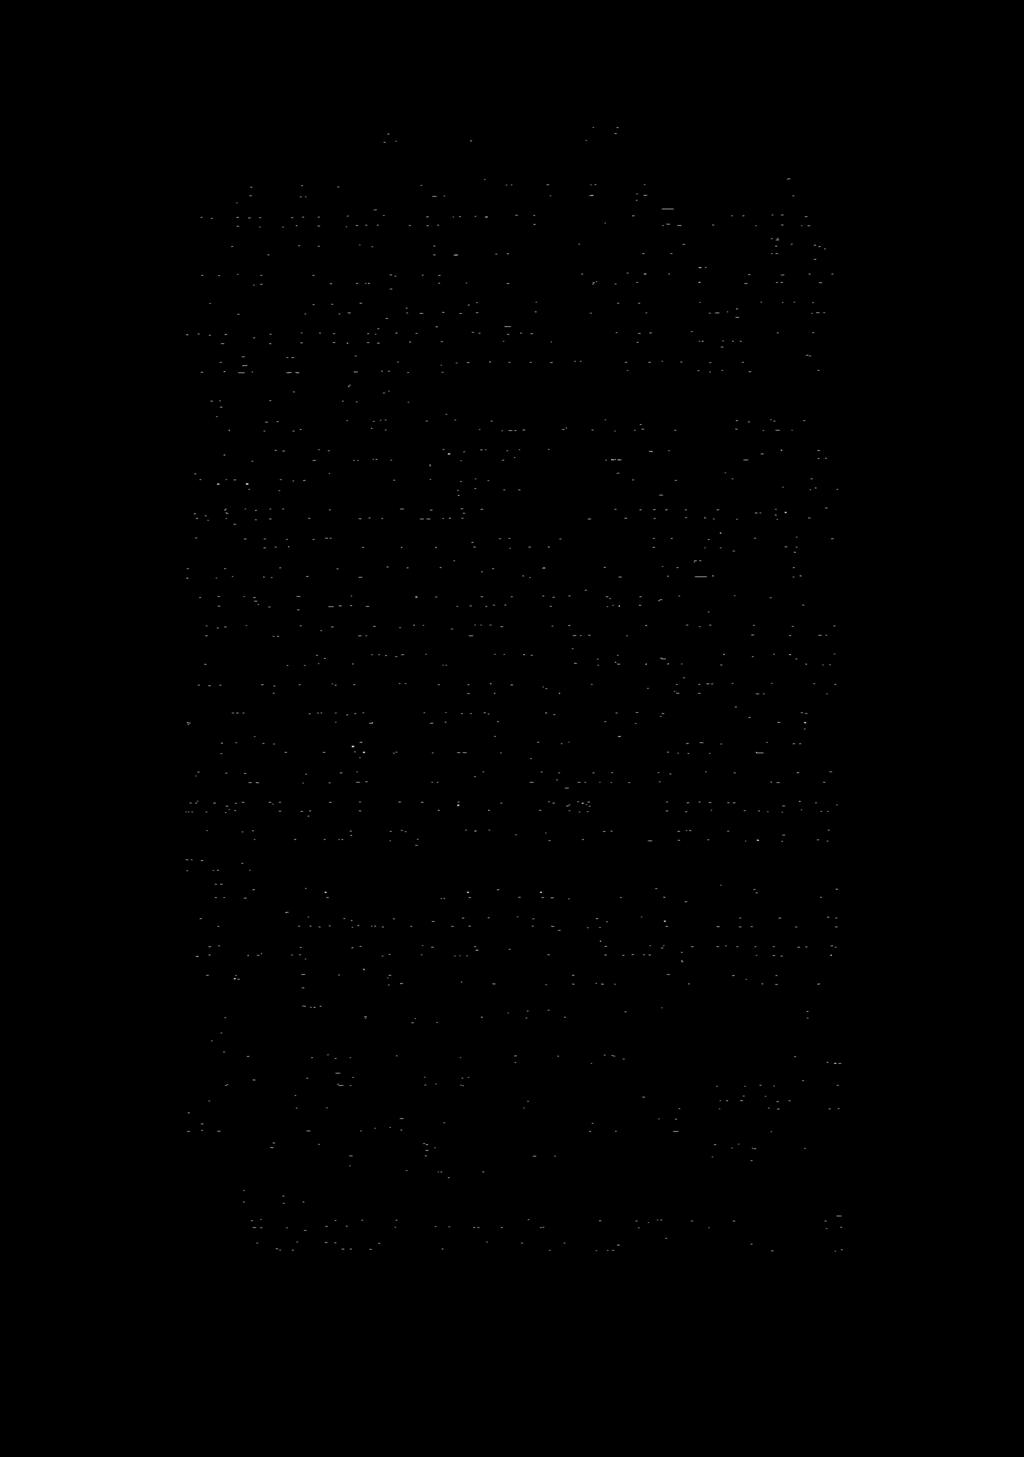 ORBICULAR GABBRO-DIORITE 295 principal localities: the "prune" or "pudding" granite of Craftsbury, Vermont; the orbicular diorite at Rattlesnake Bar, El Dorado county, California; the granite from